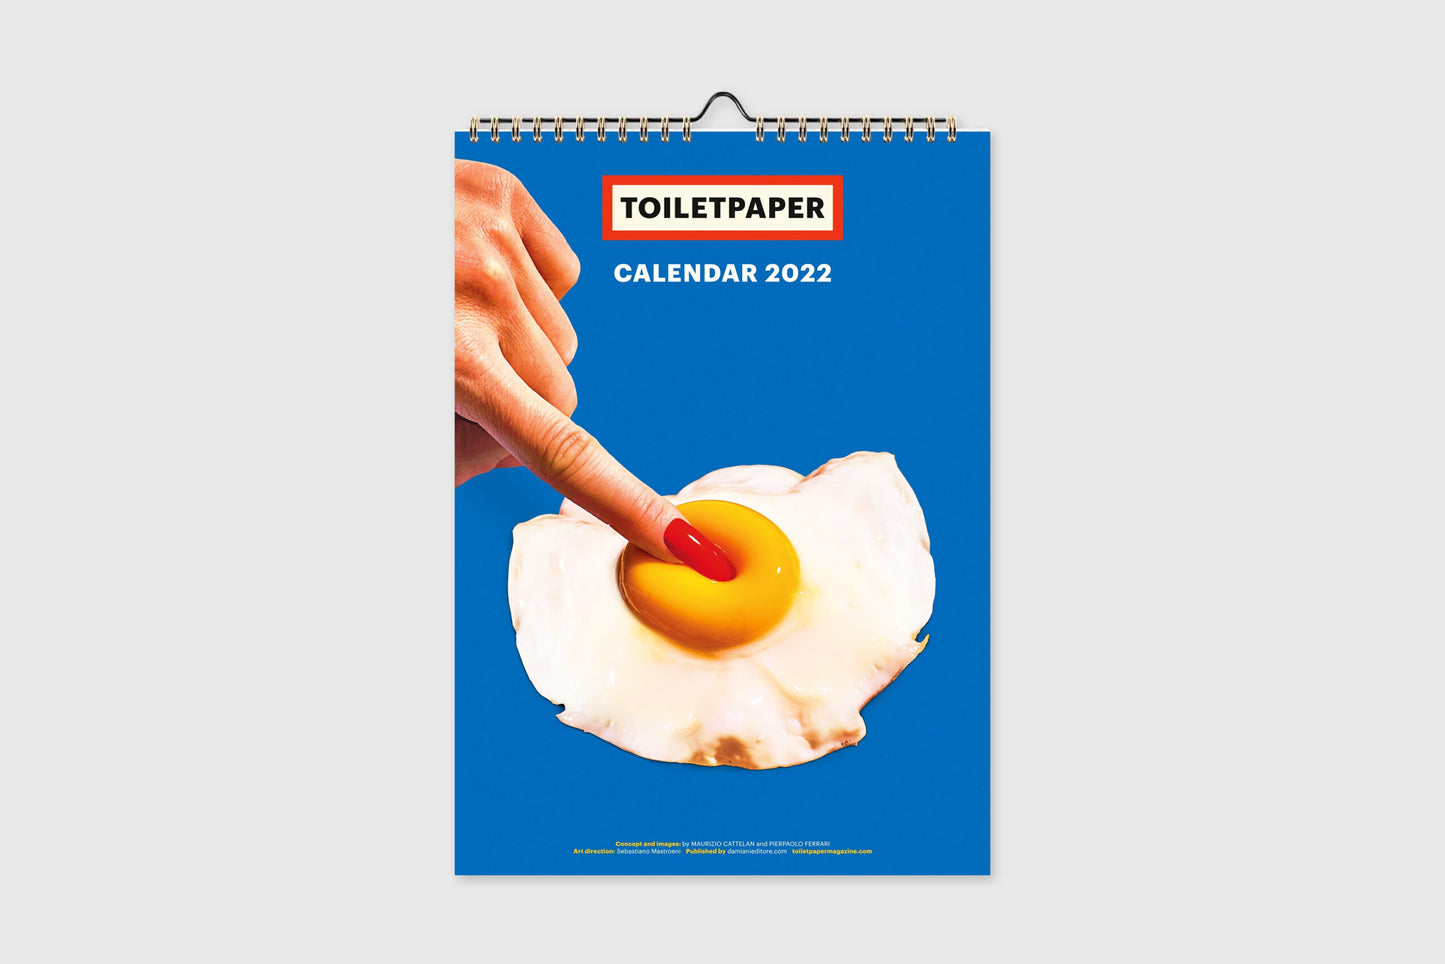 Toiletpaper Calendar 2022